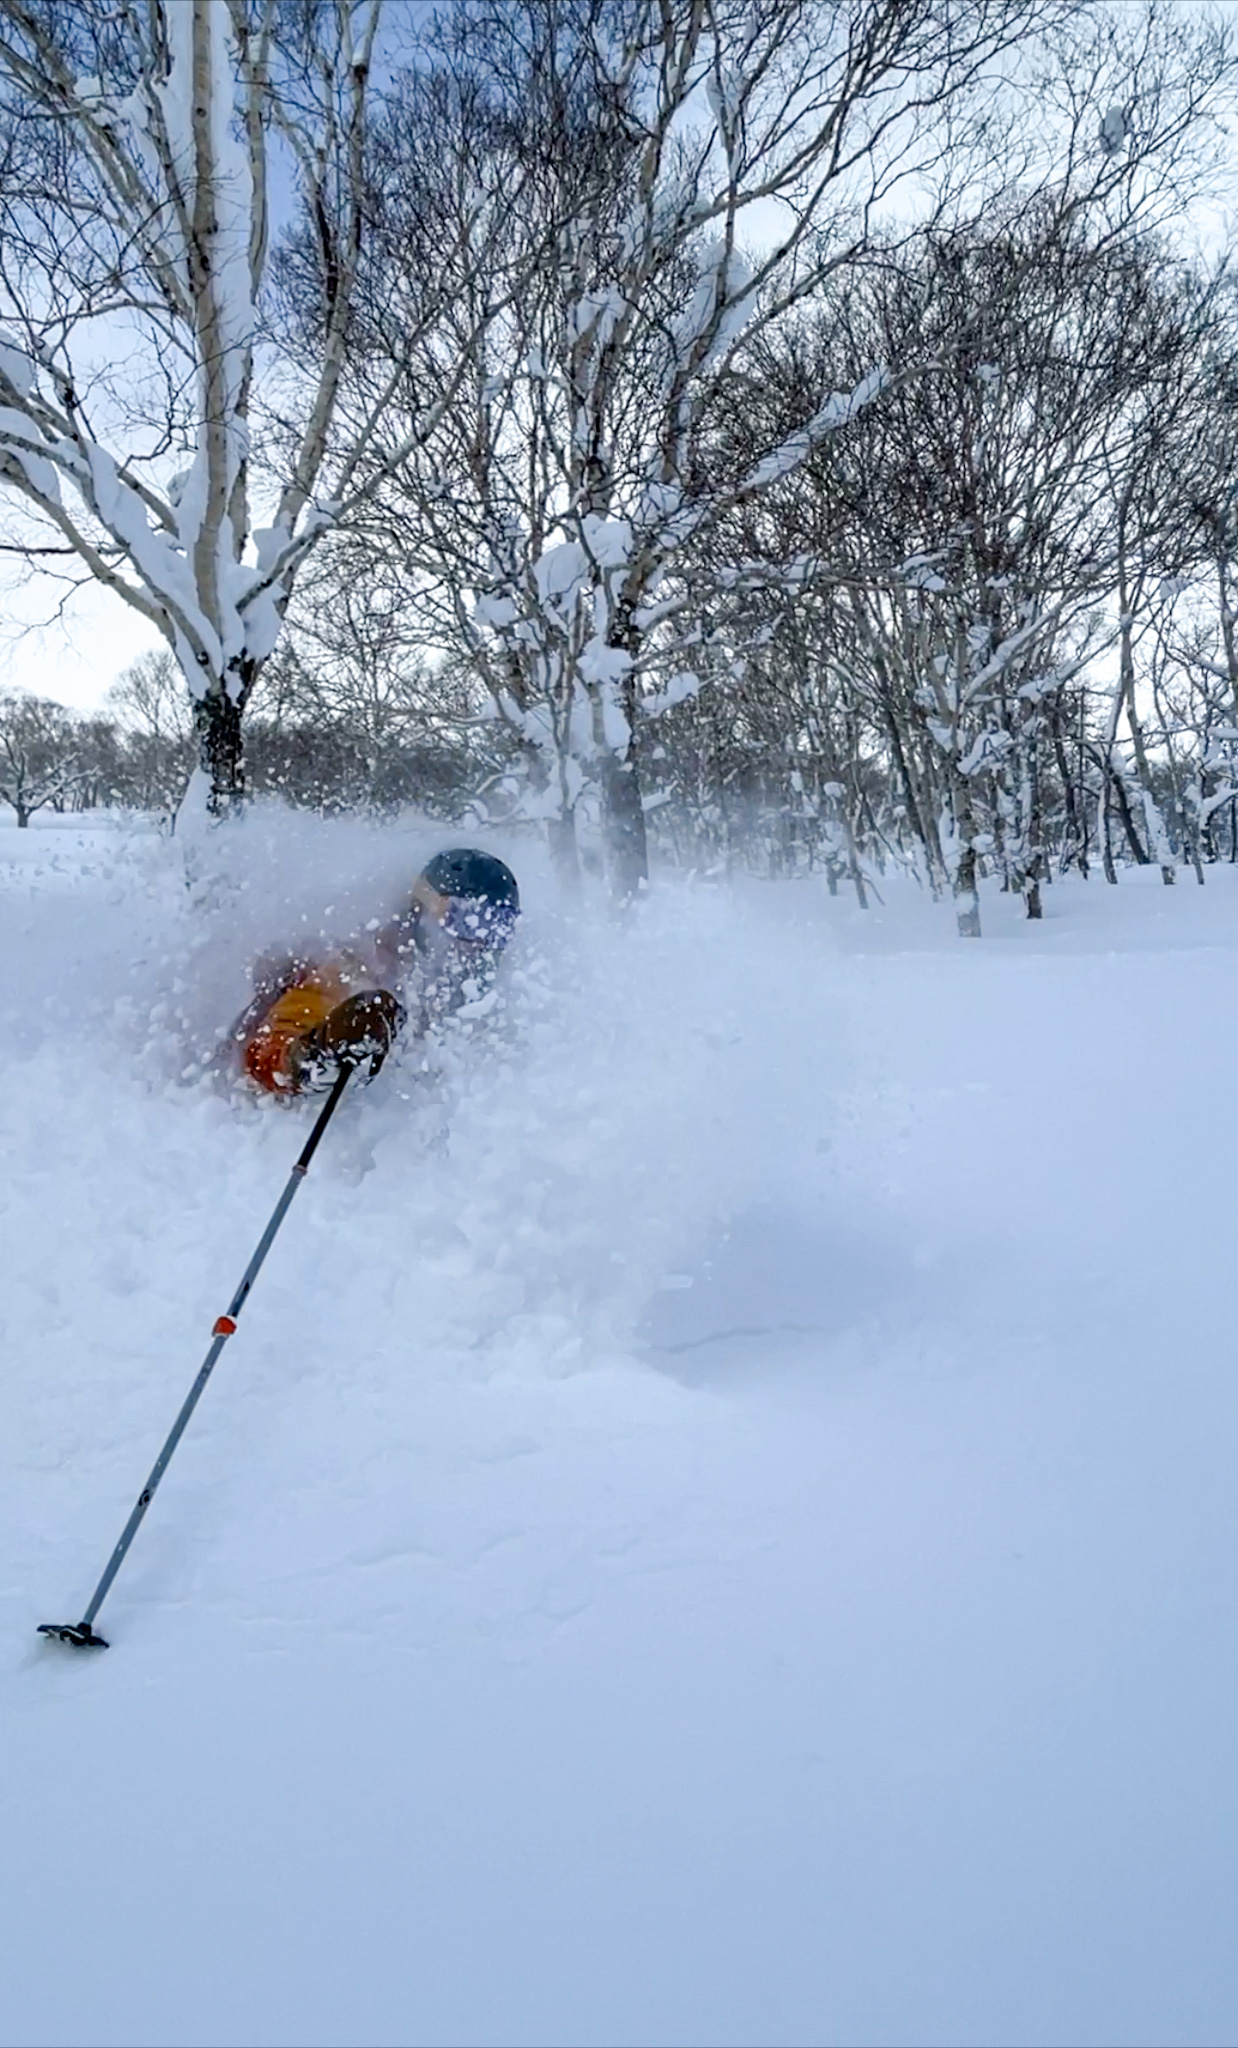 powder skiing in Japan